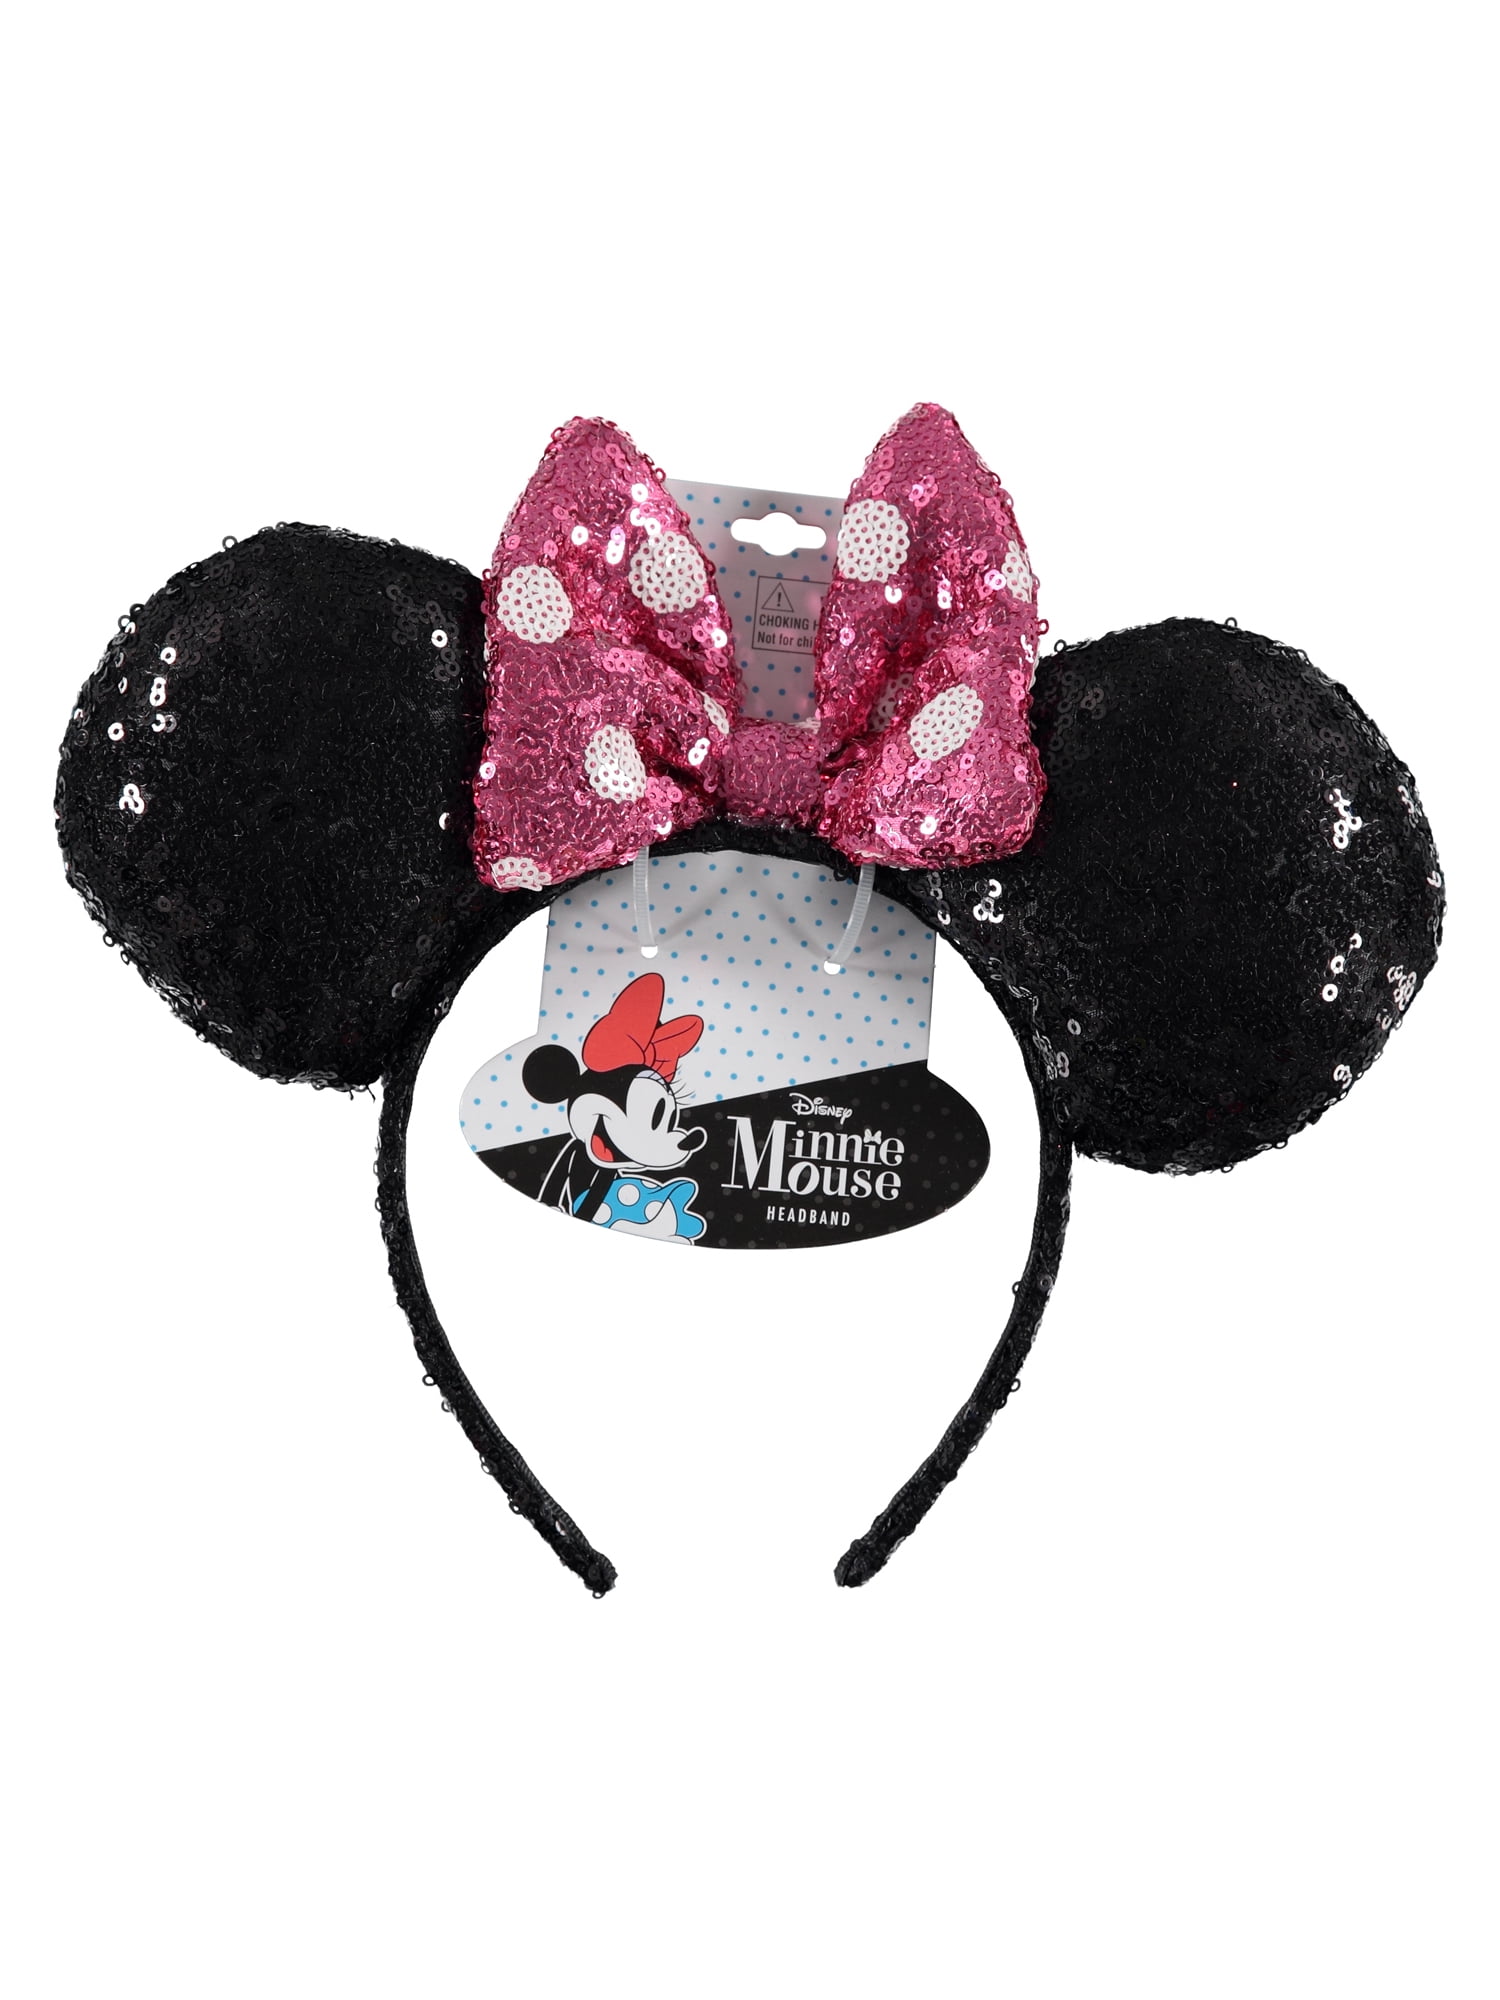 Minnie Mouse Ears Headbands 20 pcs Shiny Black Pink Bow Birthday Party Costume 